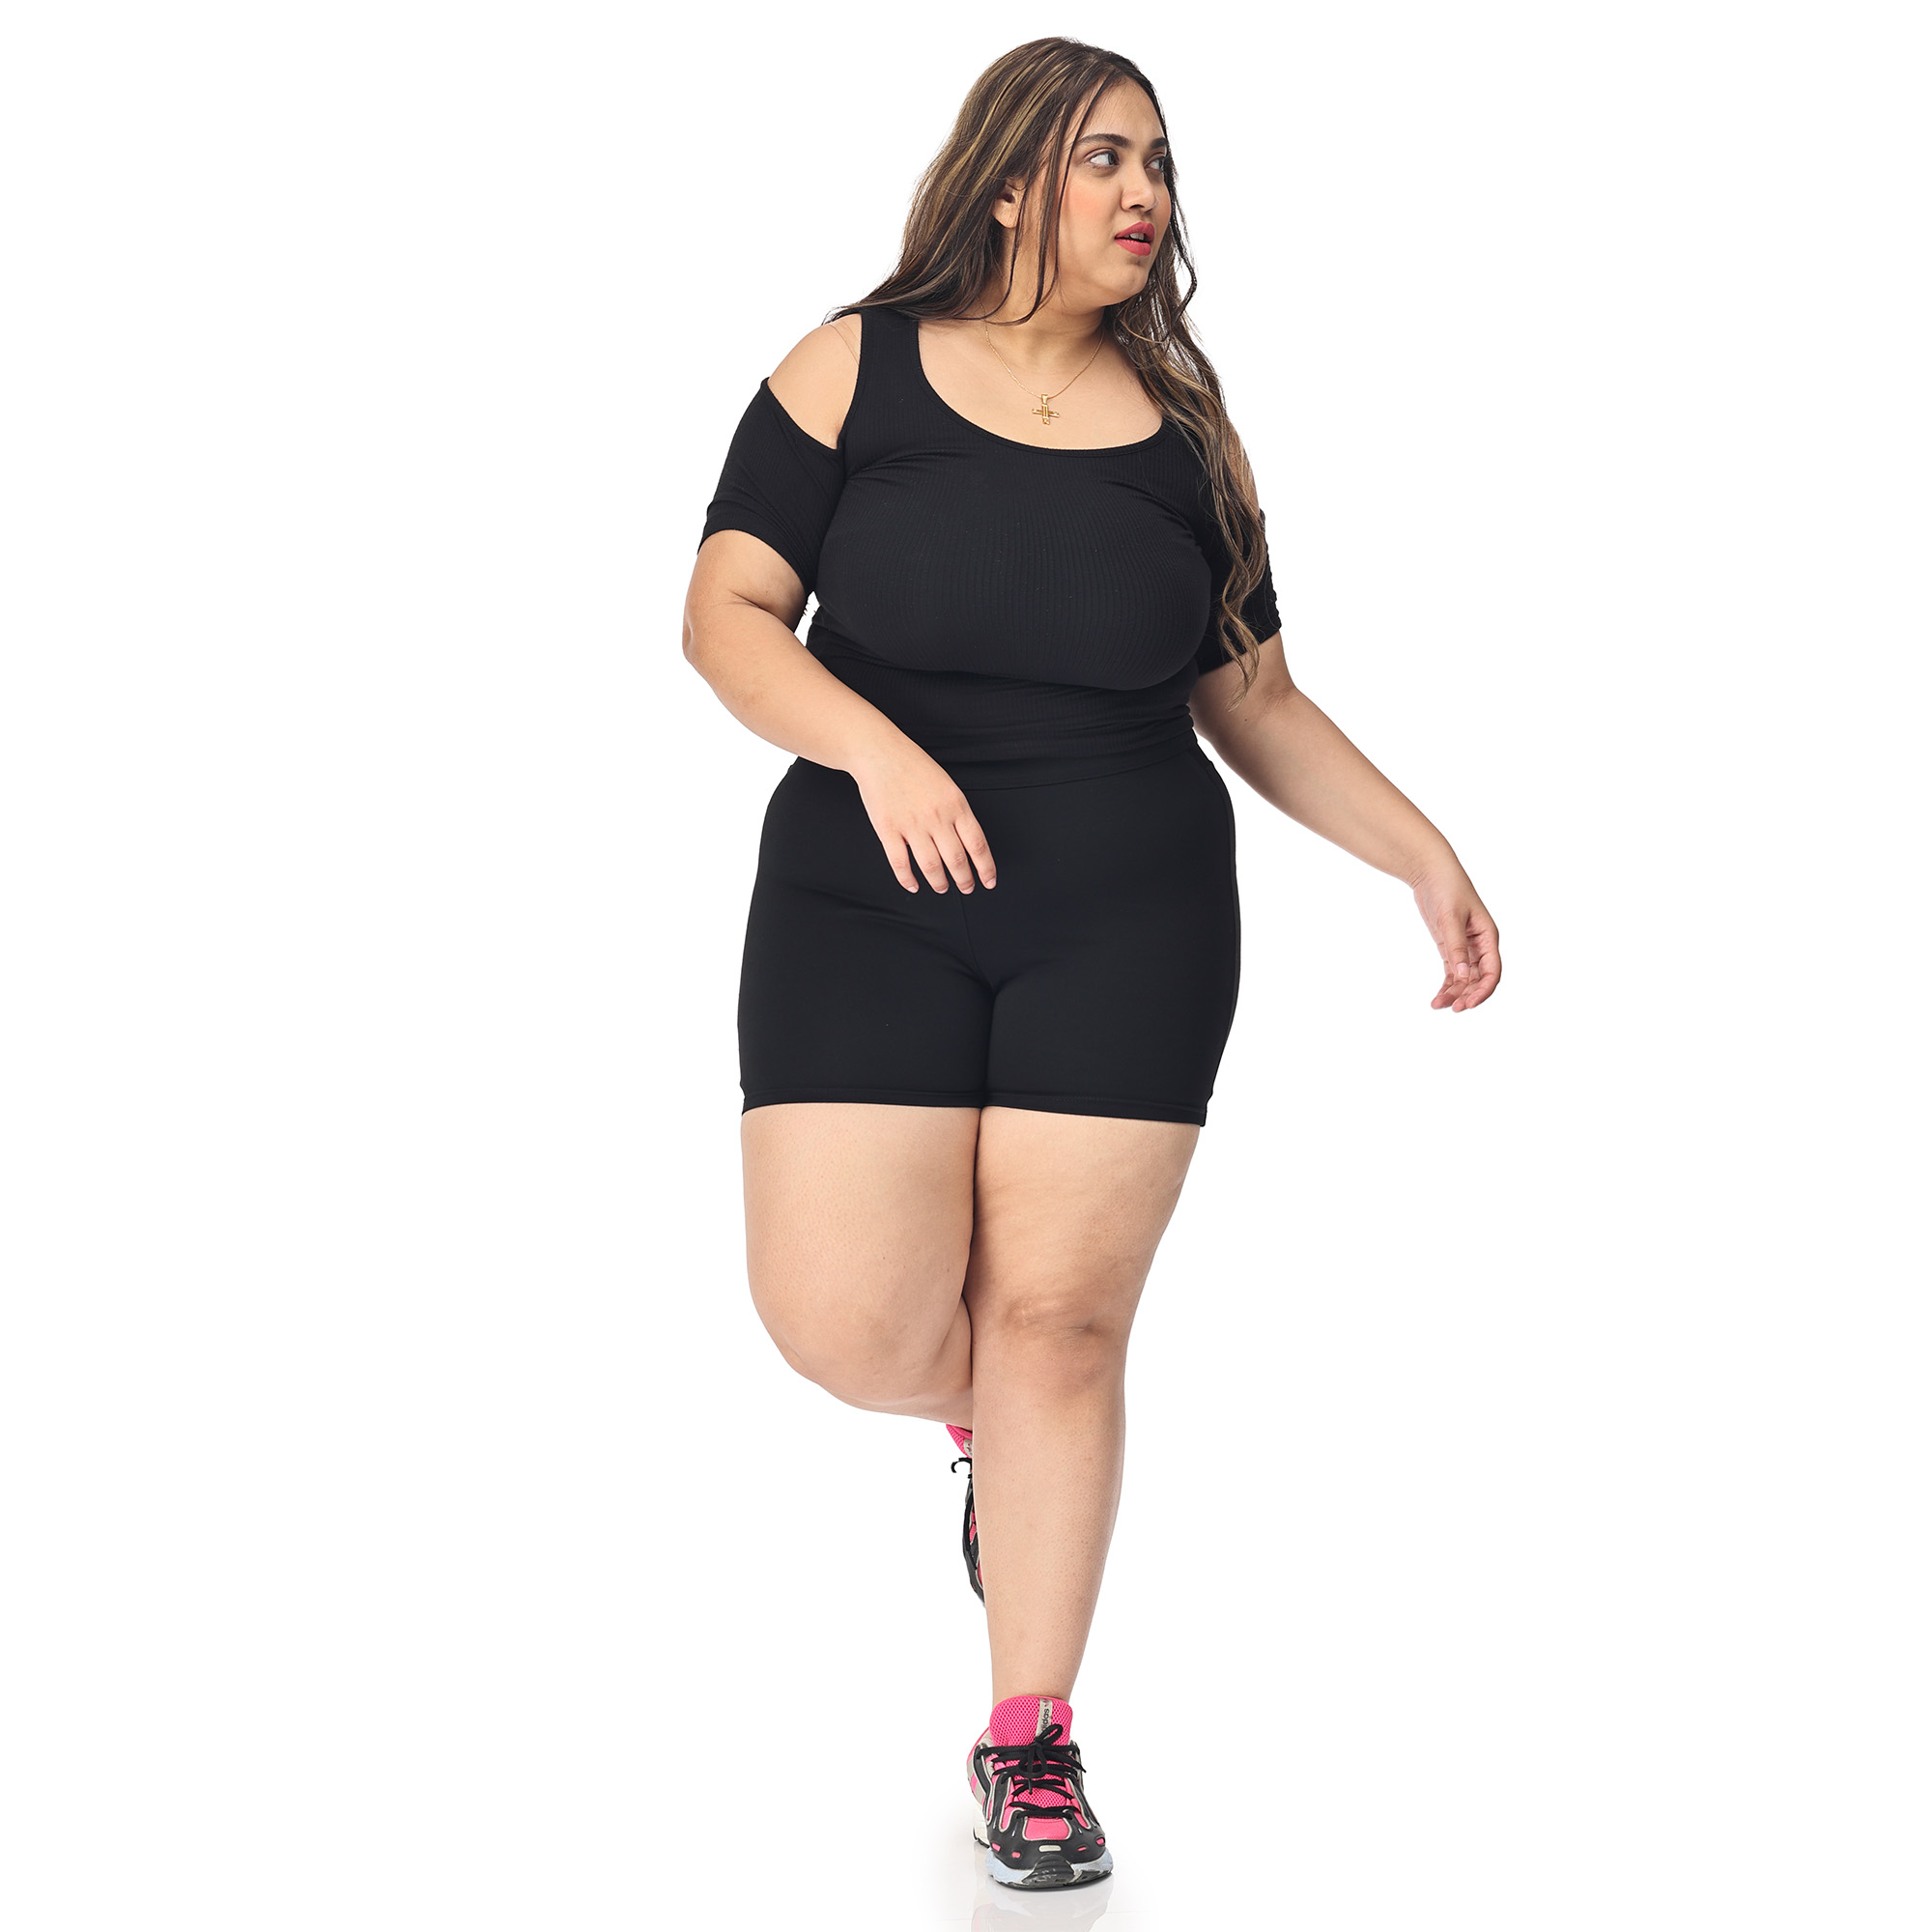 Brown shorts women - Plus size active shape wear-2 back pockets - Belore  Slims